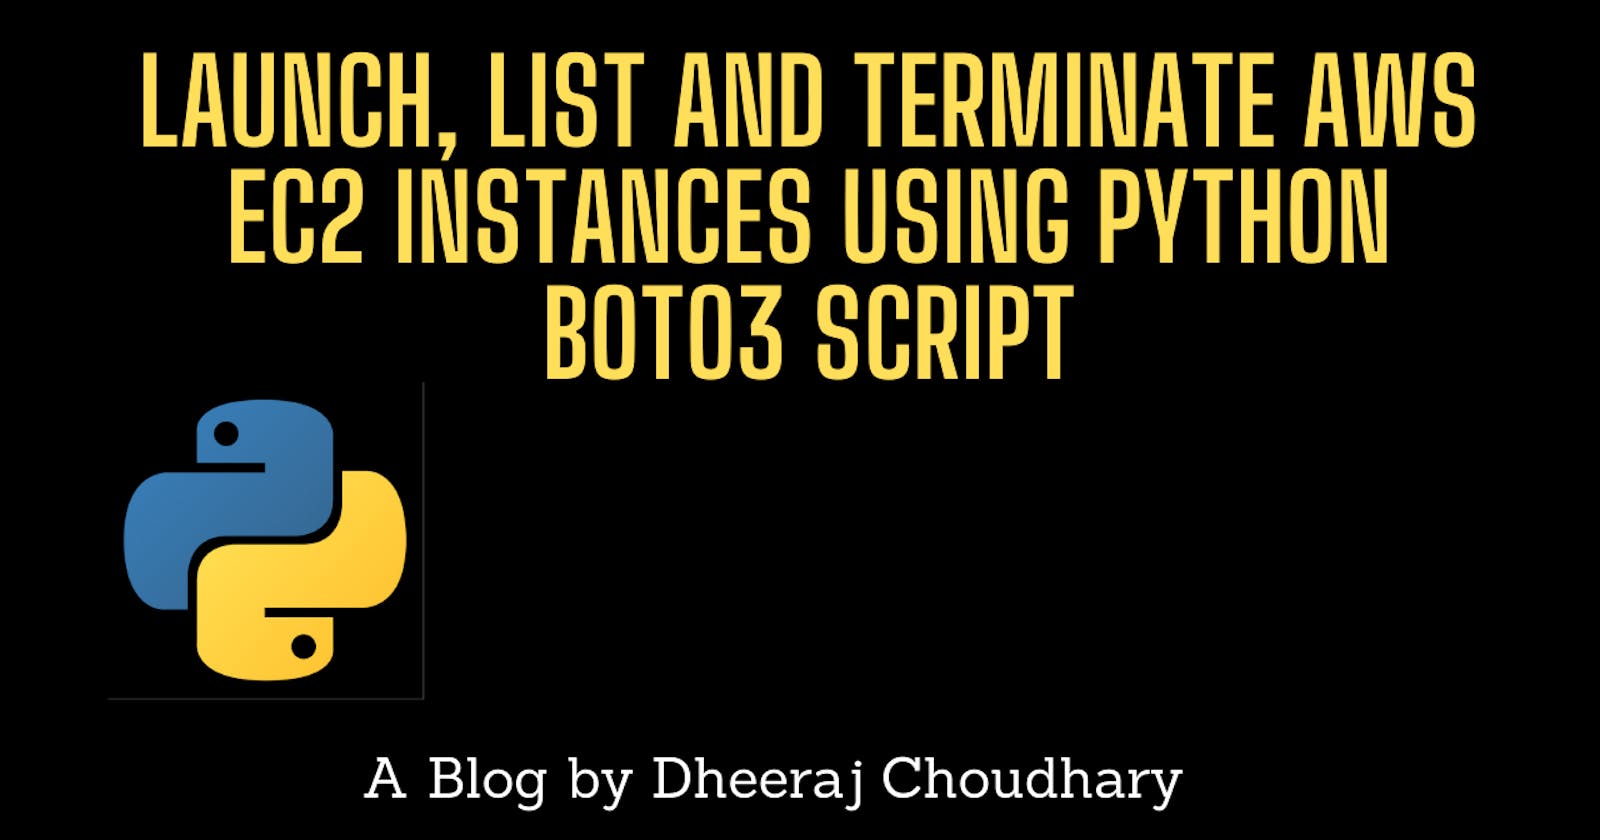 Launch, List And Terminate AWS EC2 instances using python boto3 script